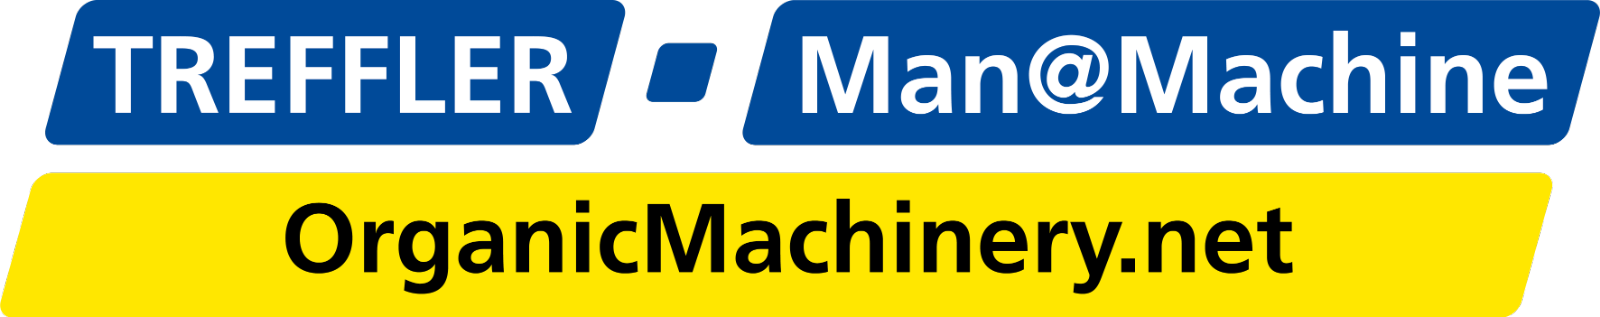 Manat Machinery / Trefller logo